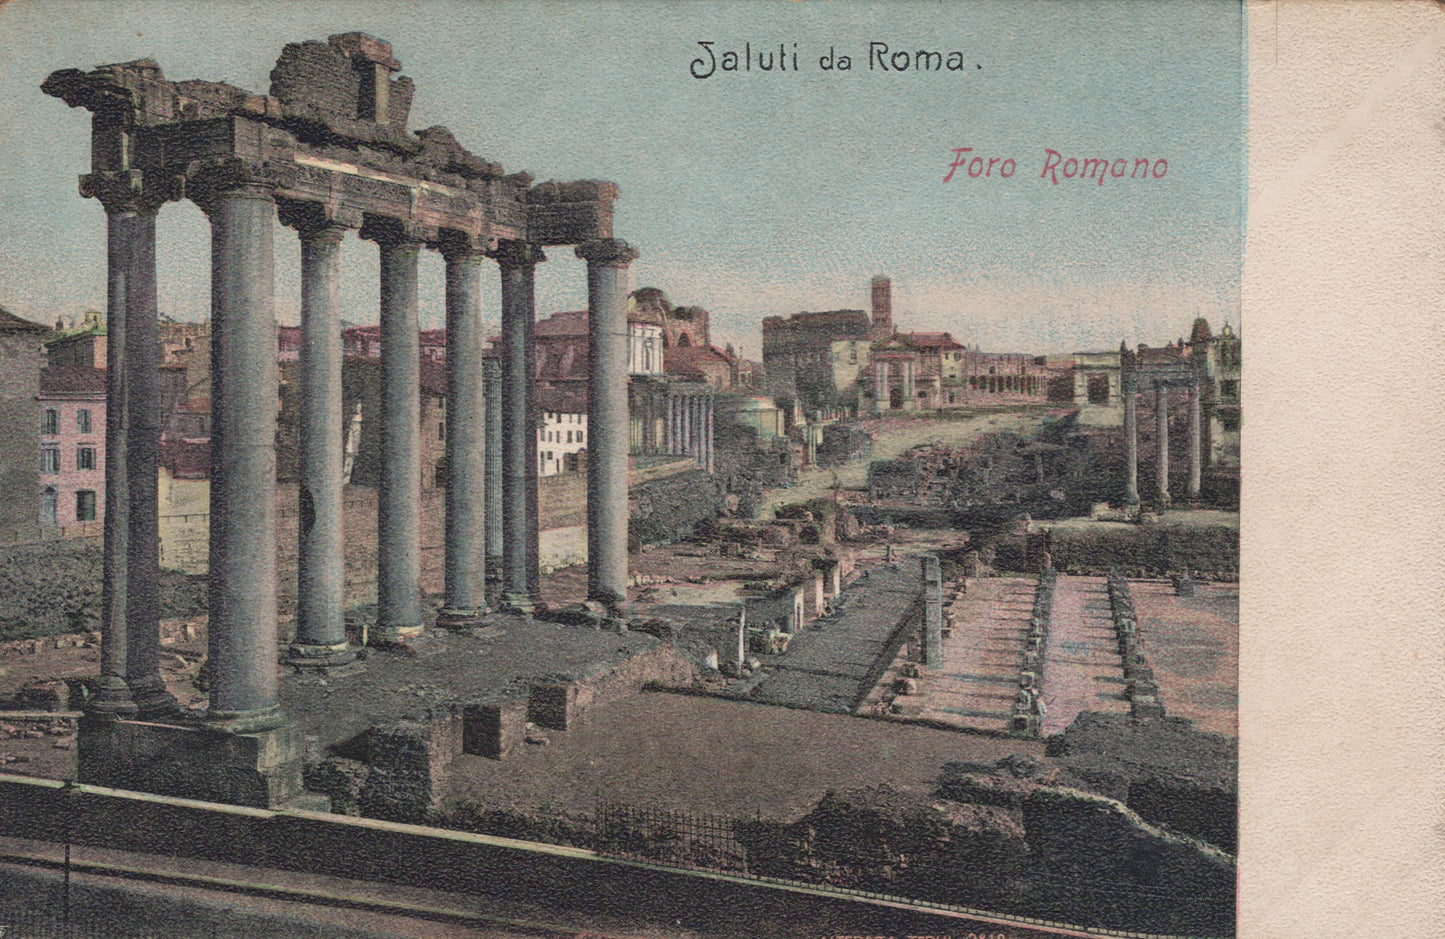 Foro Romano II, Rome